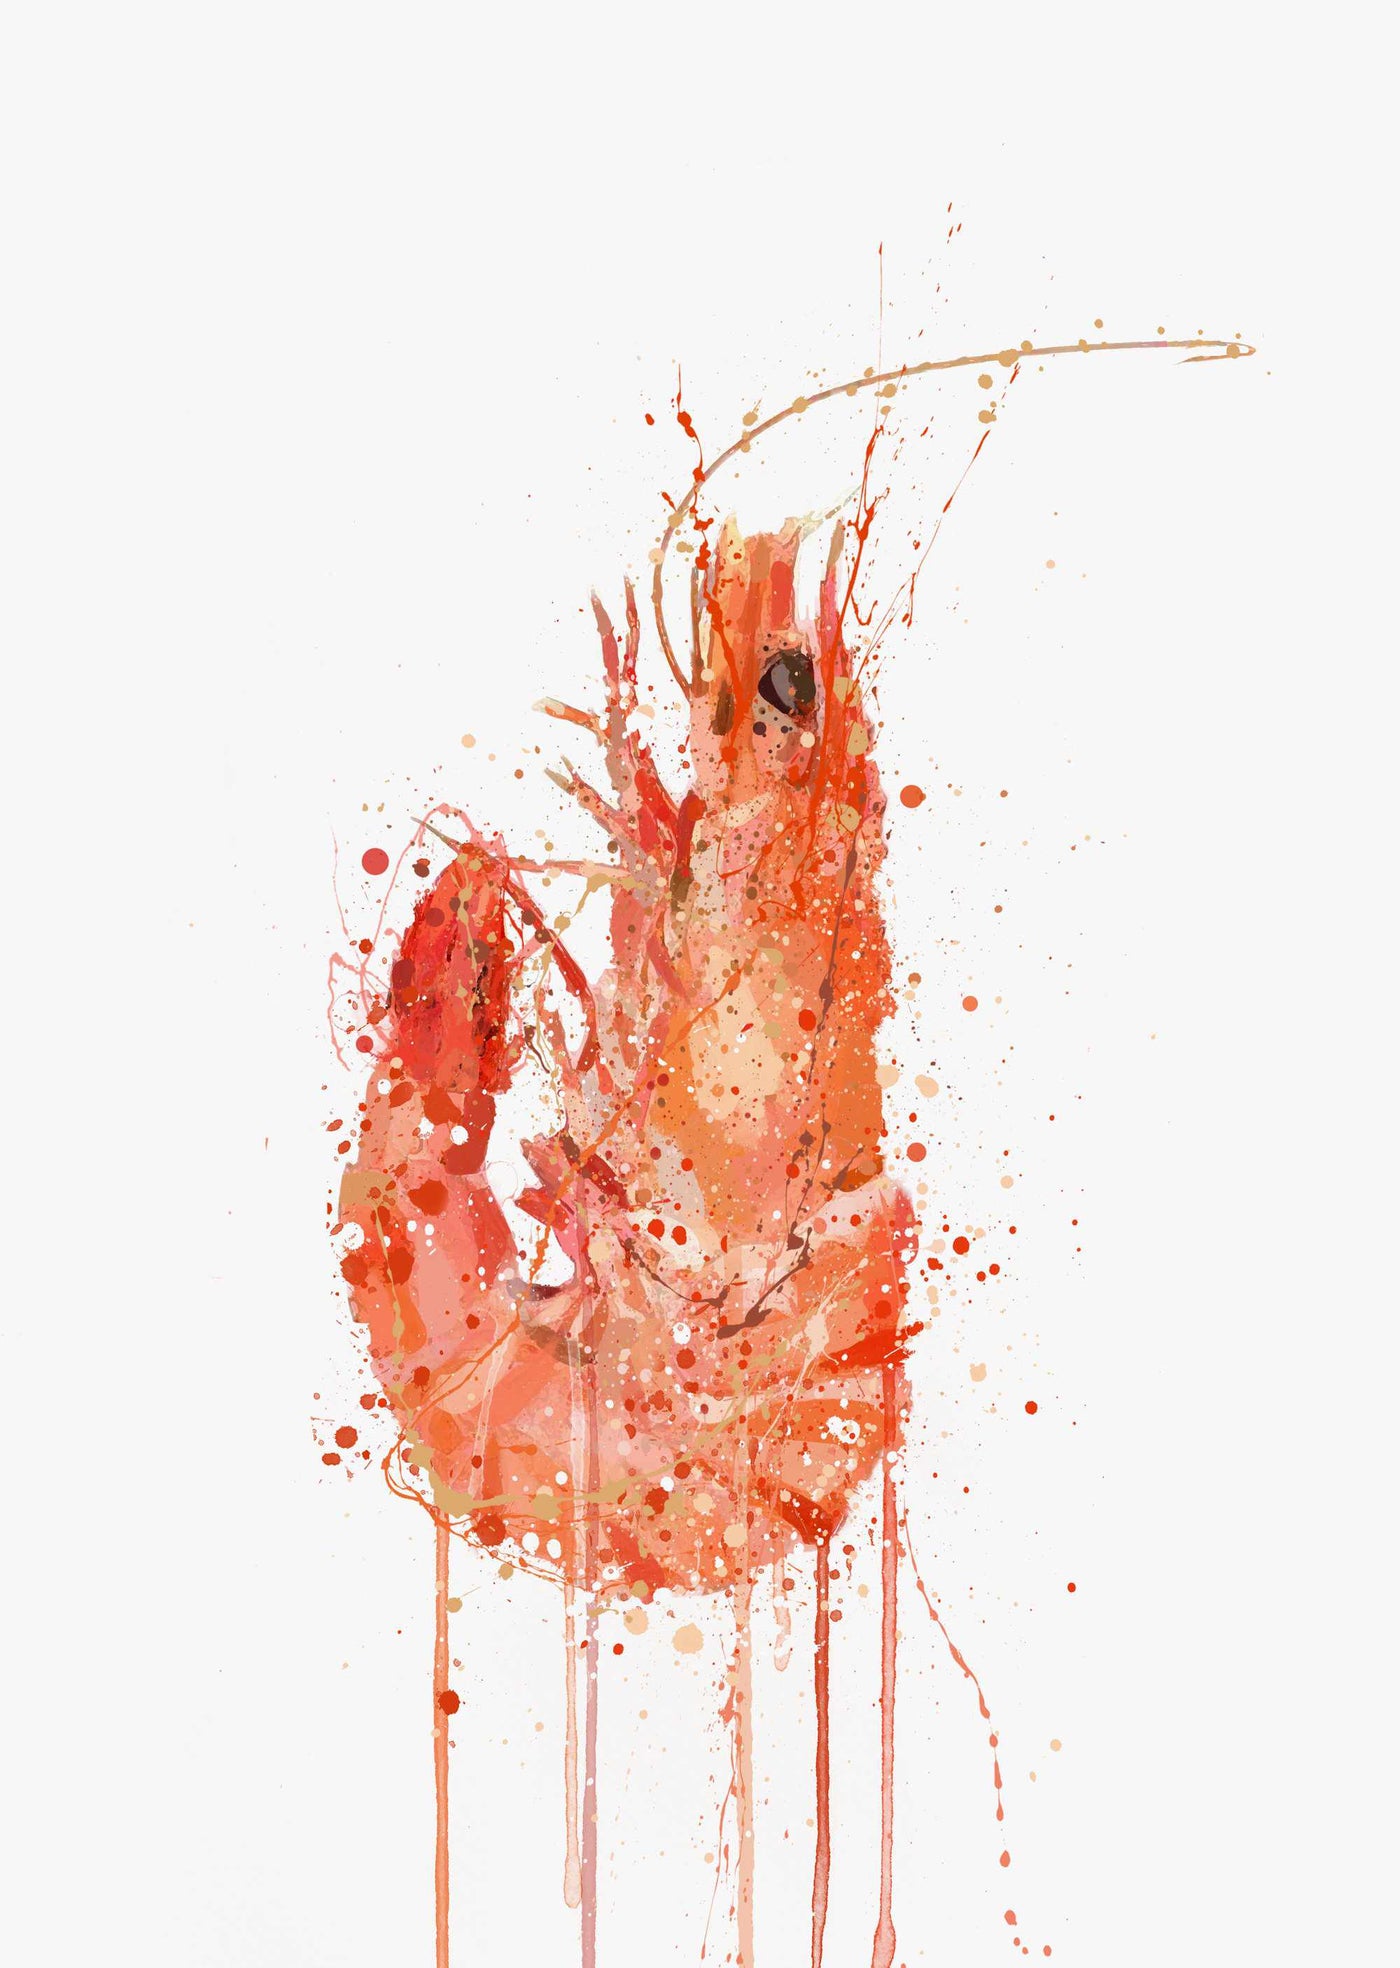 Seafood Wall Art Print 'Prawn'-We Love Prints